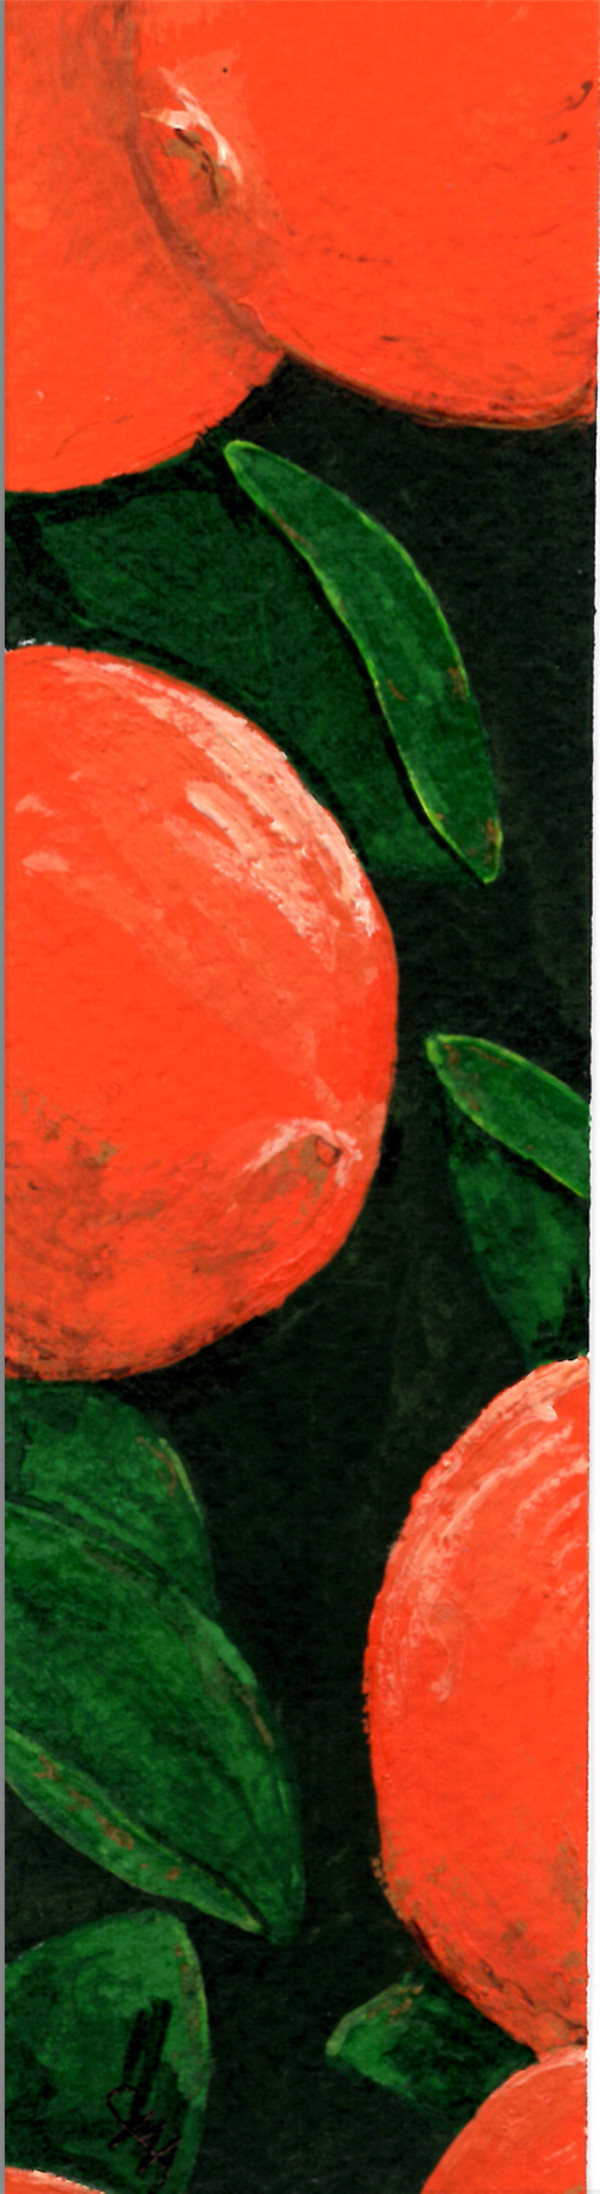 Orange Bookmark by Anja Marie Peyfuss